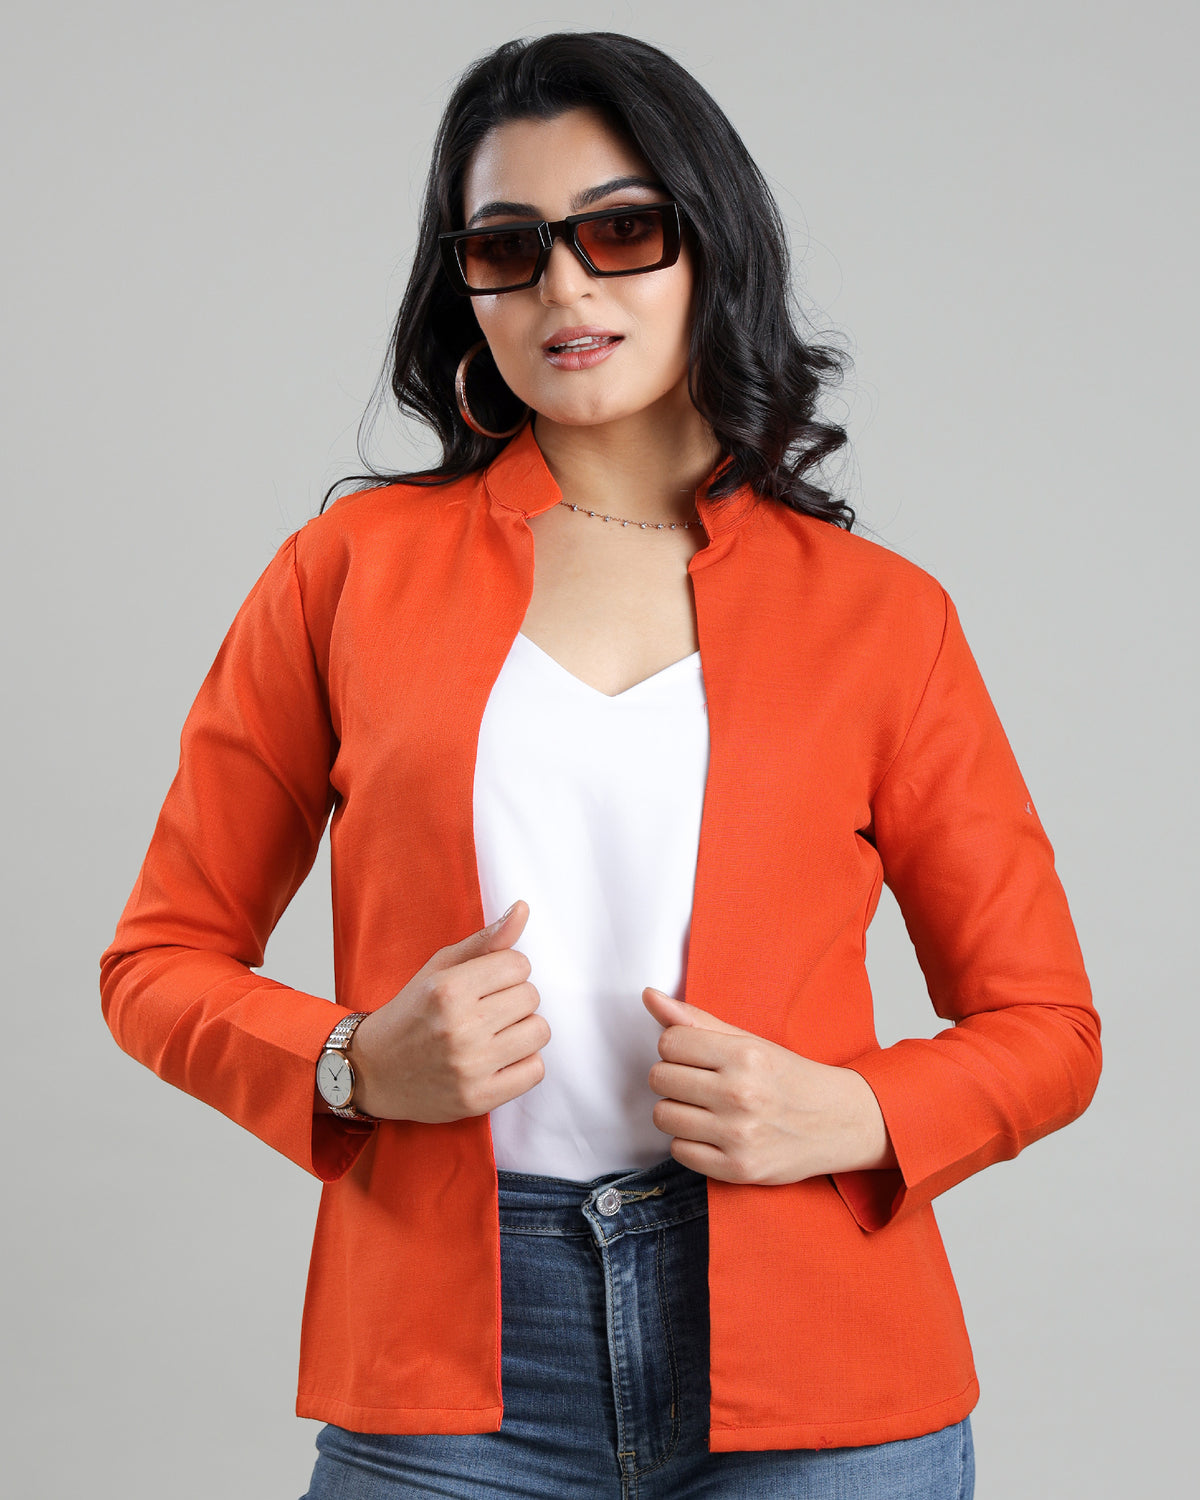 The Spark Of Inspiration Women's Orange Jacket